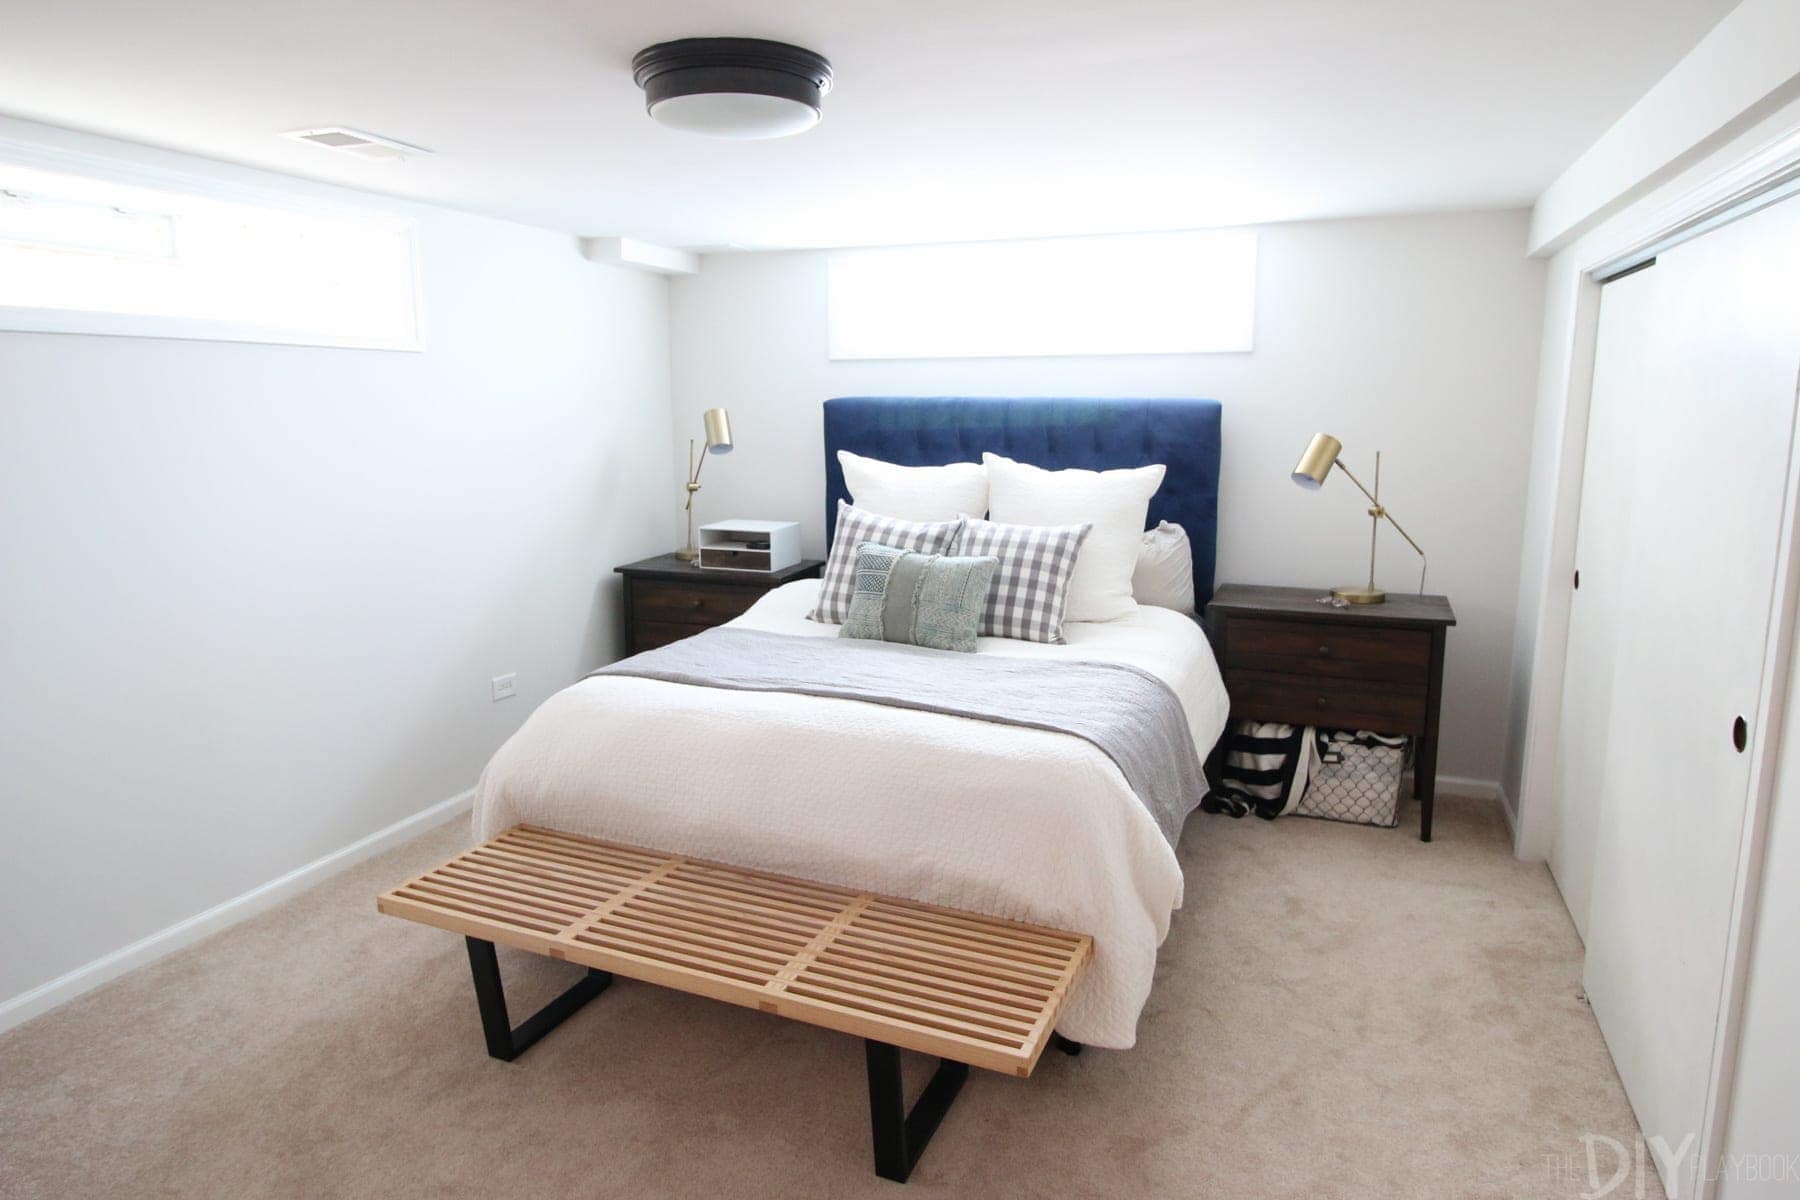 Matt and bridget's small master bedroom design. 